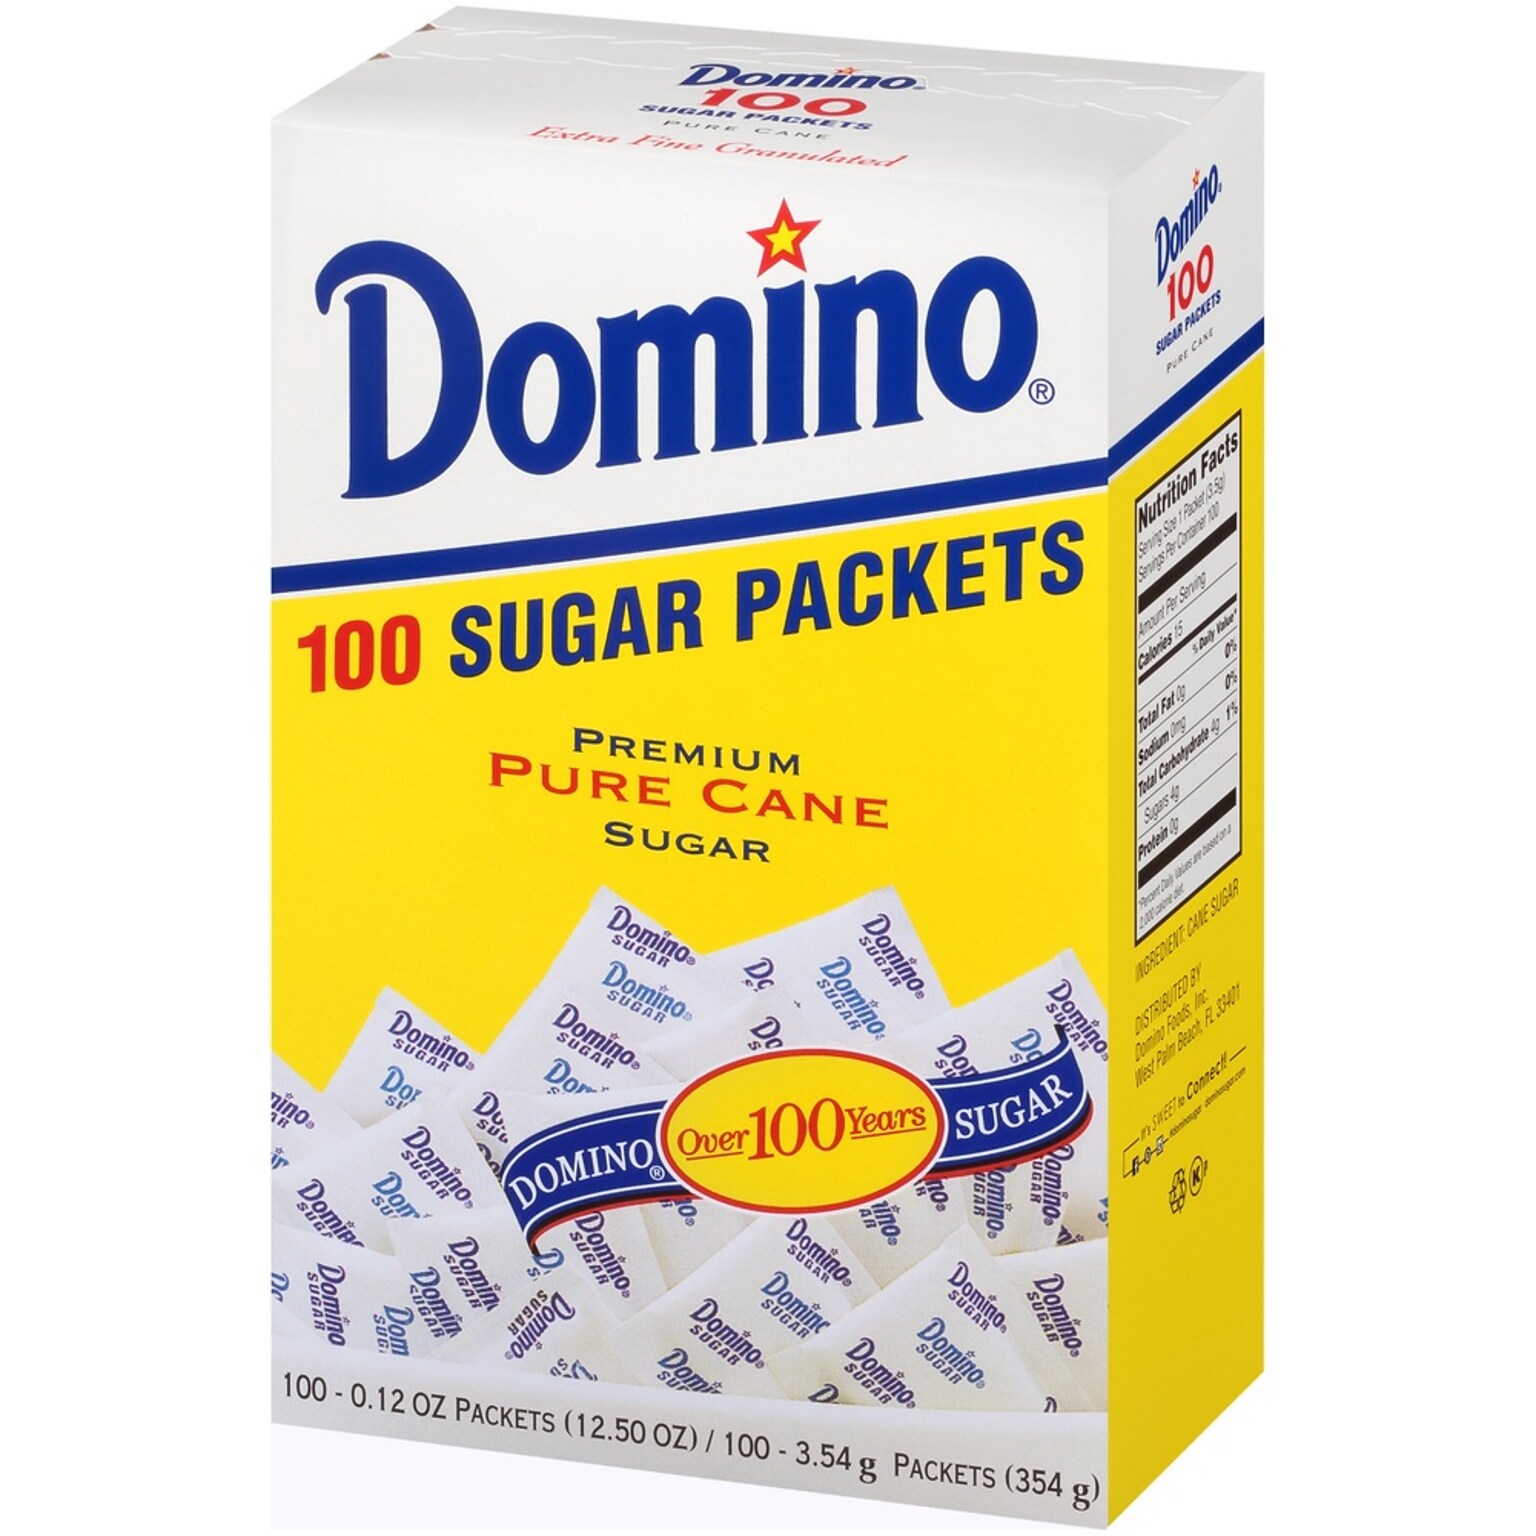 Domino Pure Cane Sugar Packets, 100 Packets/Box (DMN90554)